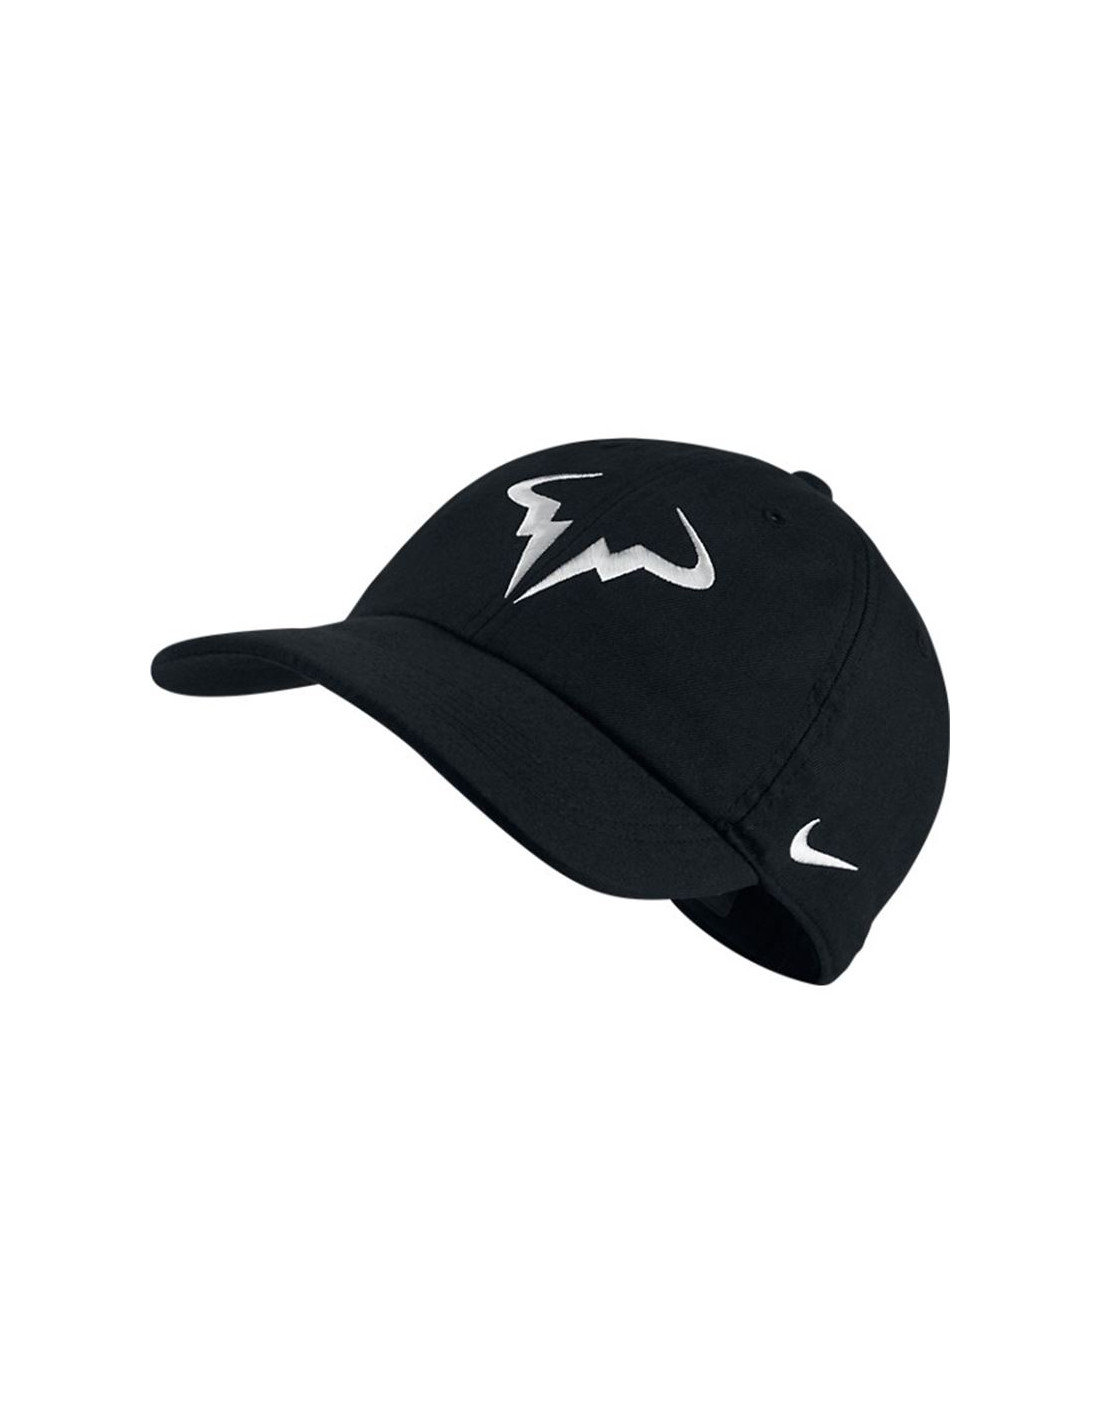 Nikecourt aerobill h86 rafa tennis hat